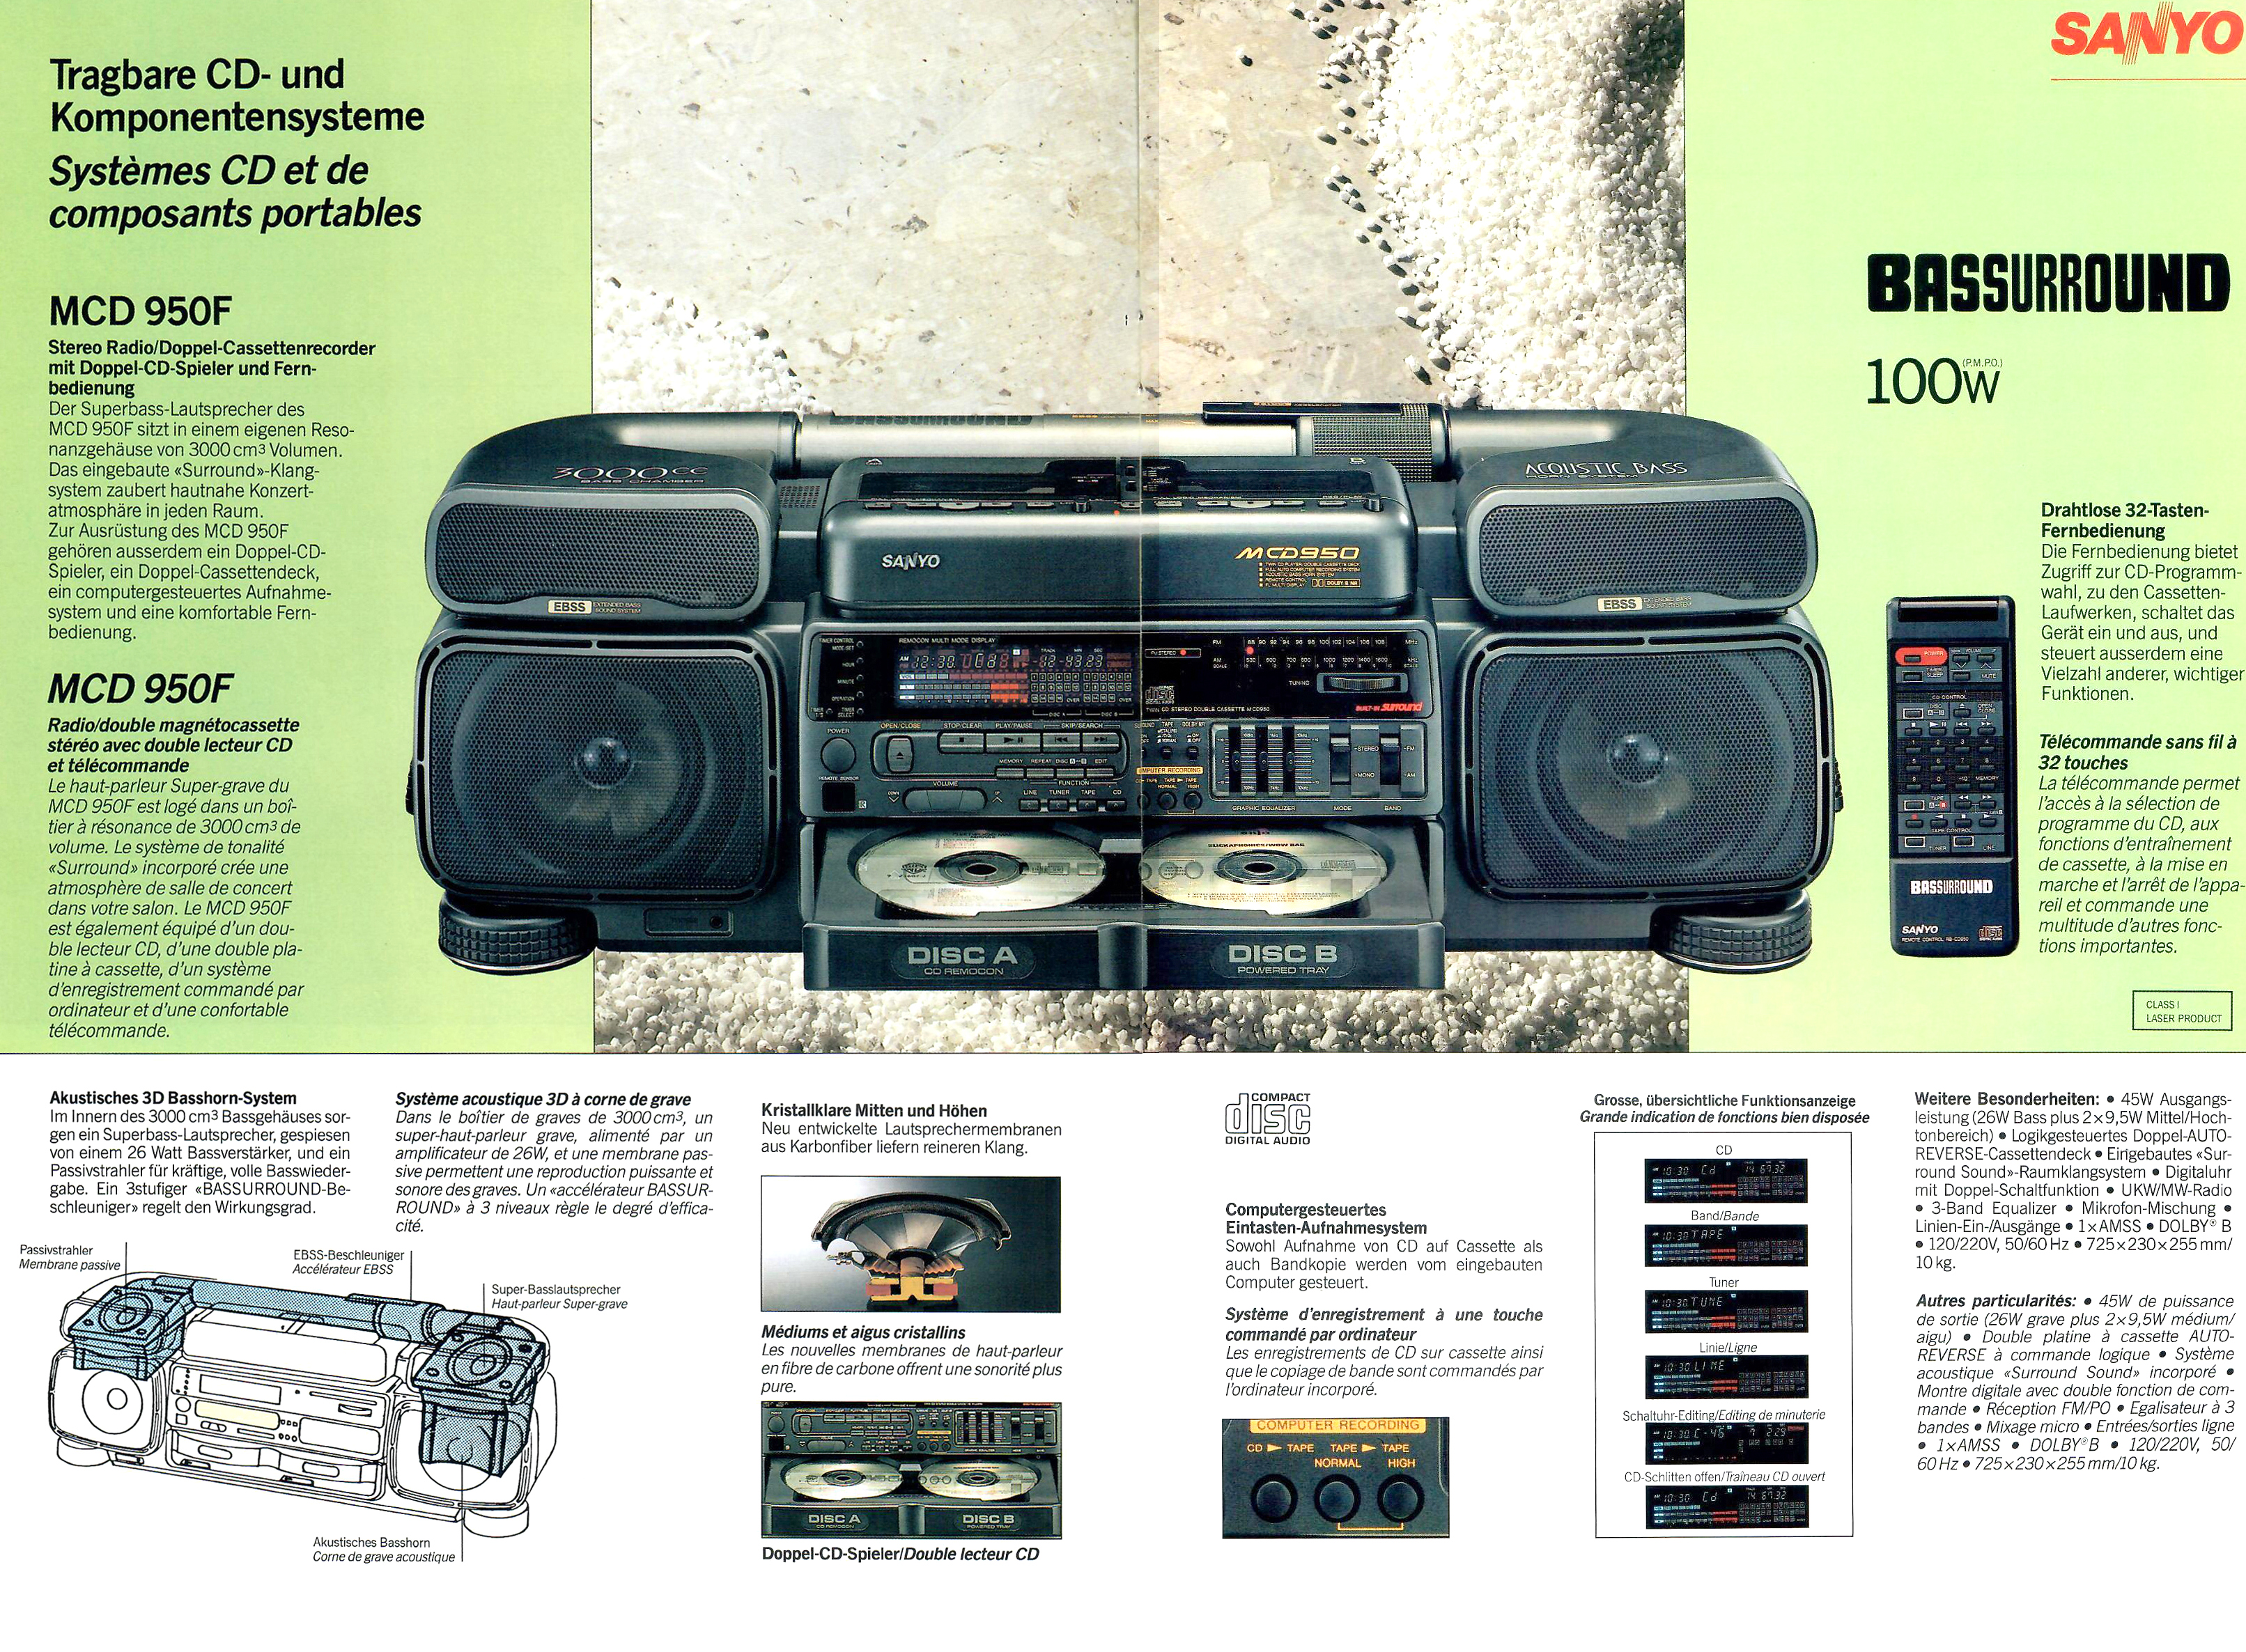 Sanyo MCD-950 F-Prospekt-1989.jpg